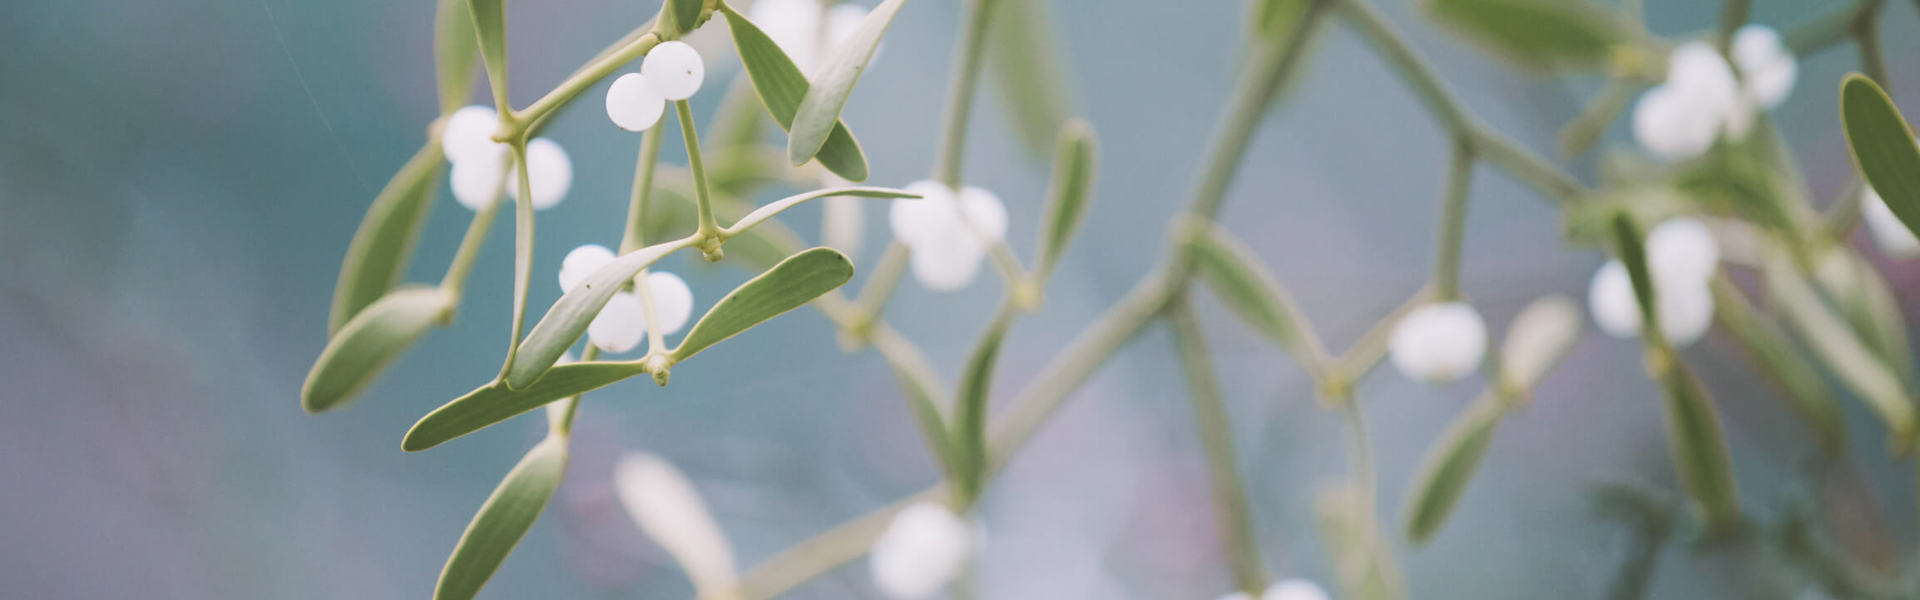 a close up of white mistletoe